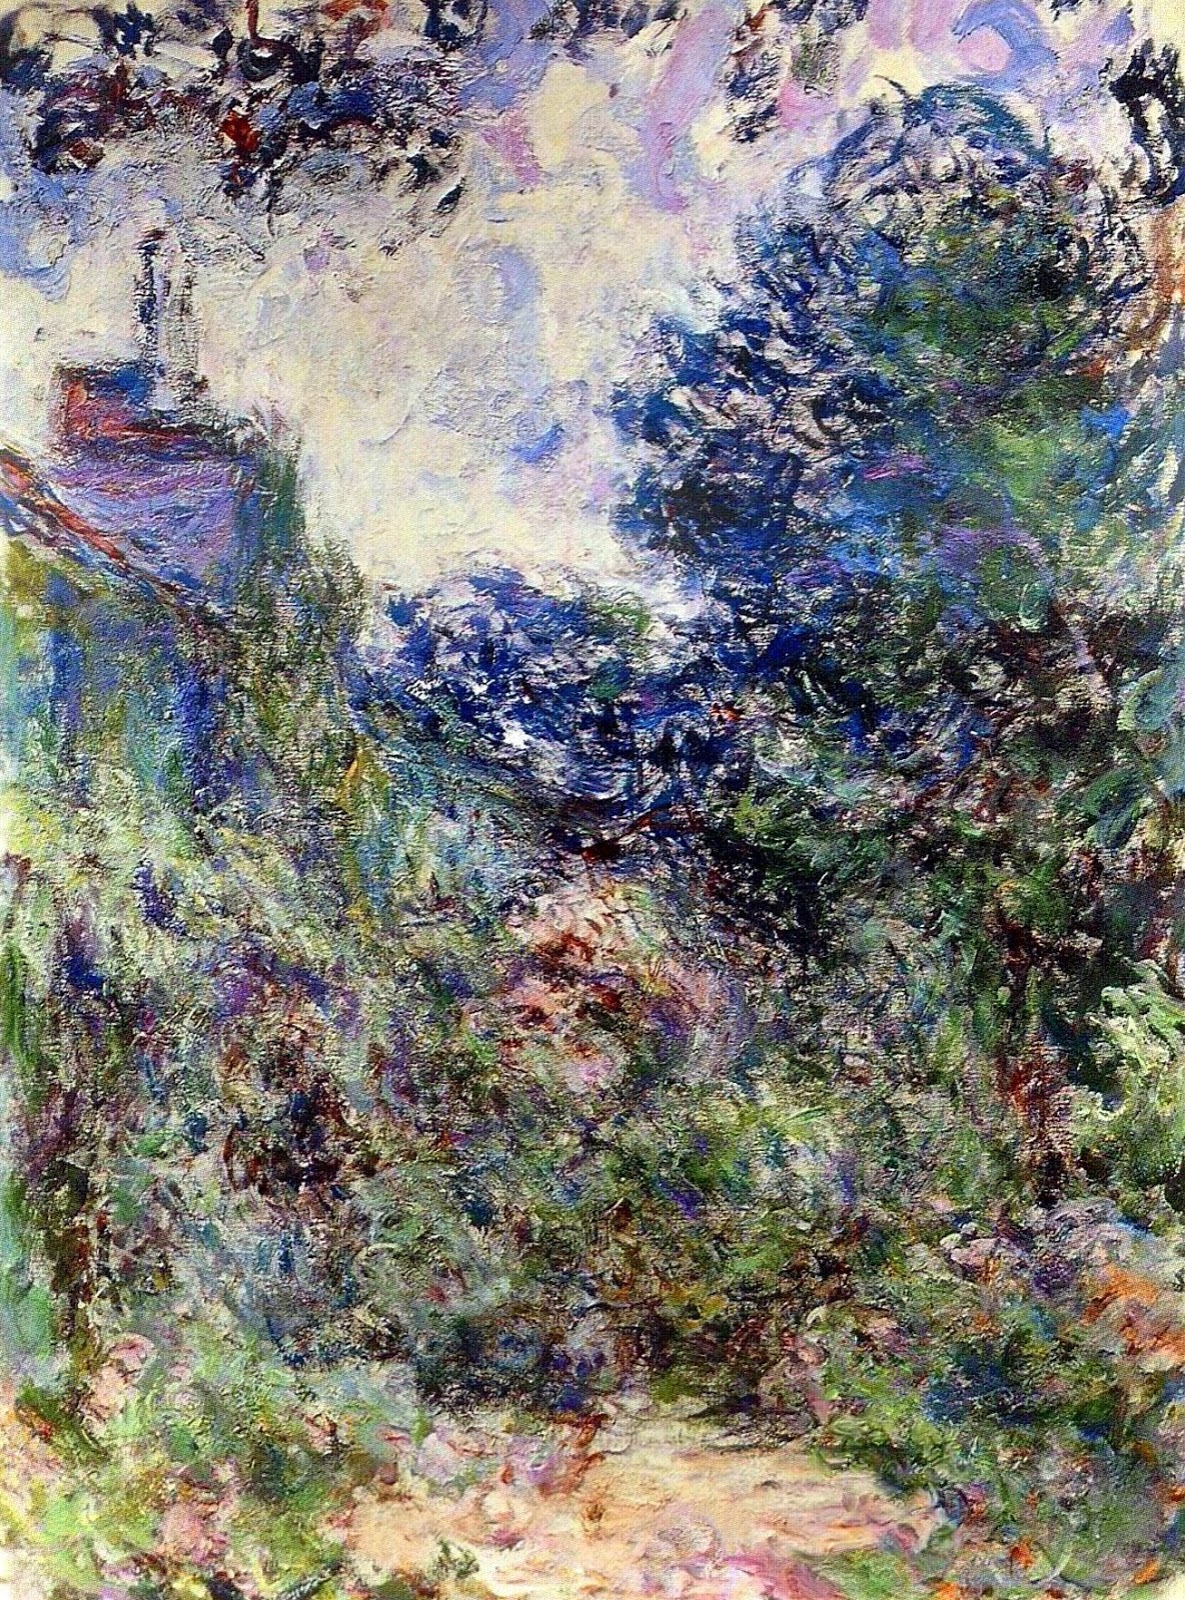 Claude+Monet-1840-1926 (374).jpg